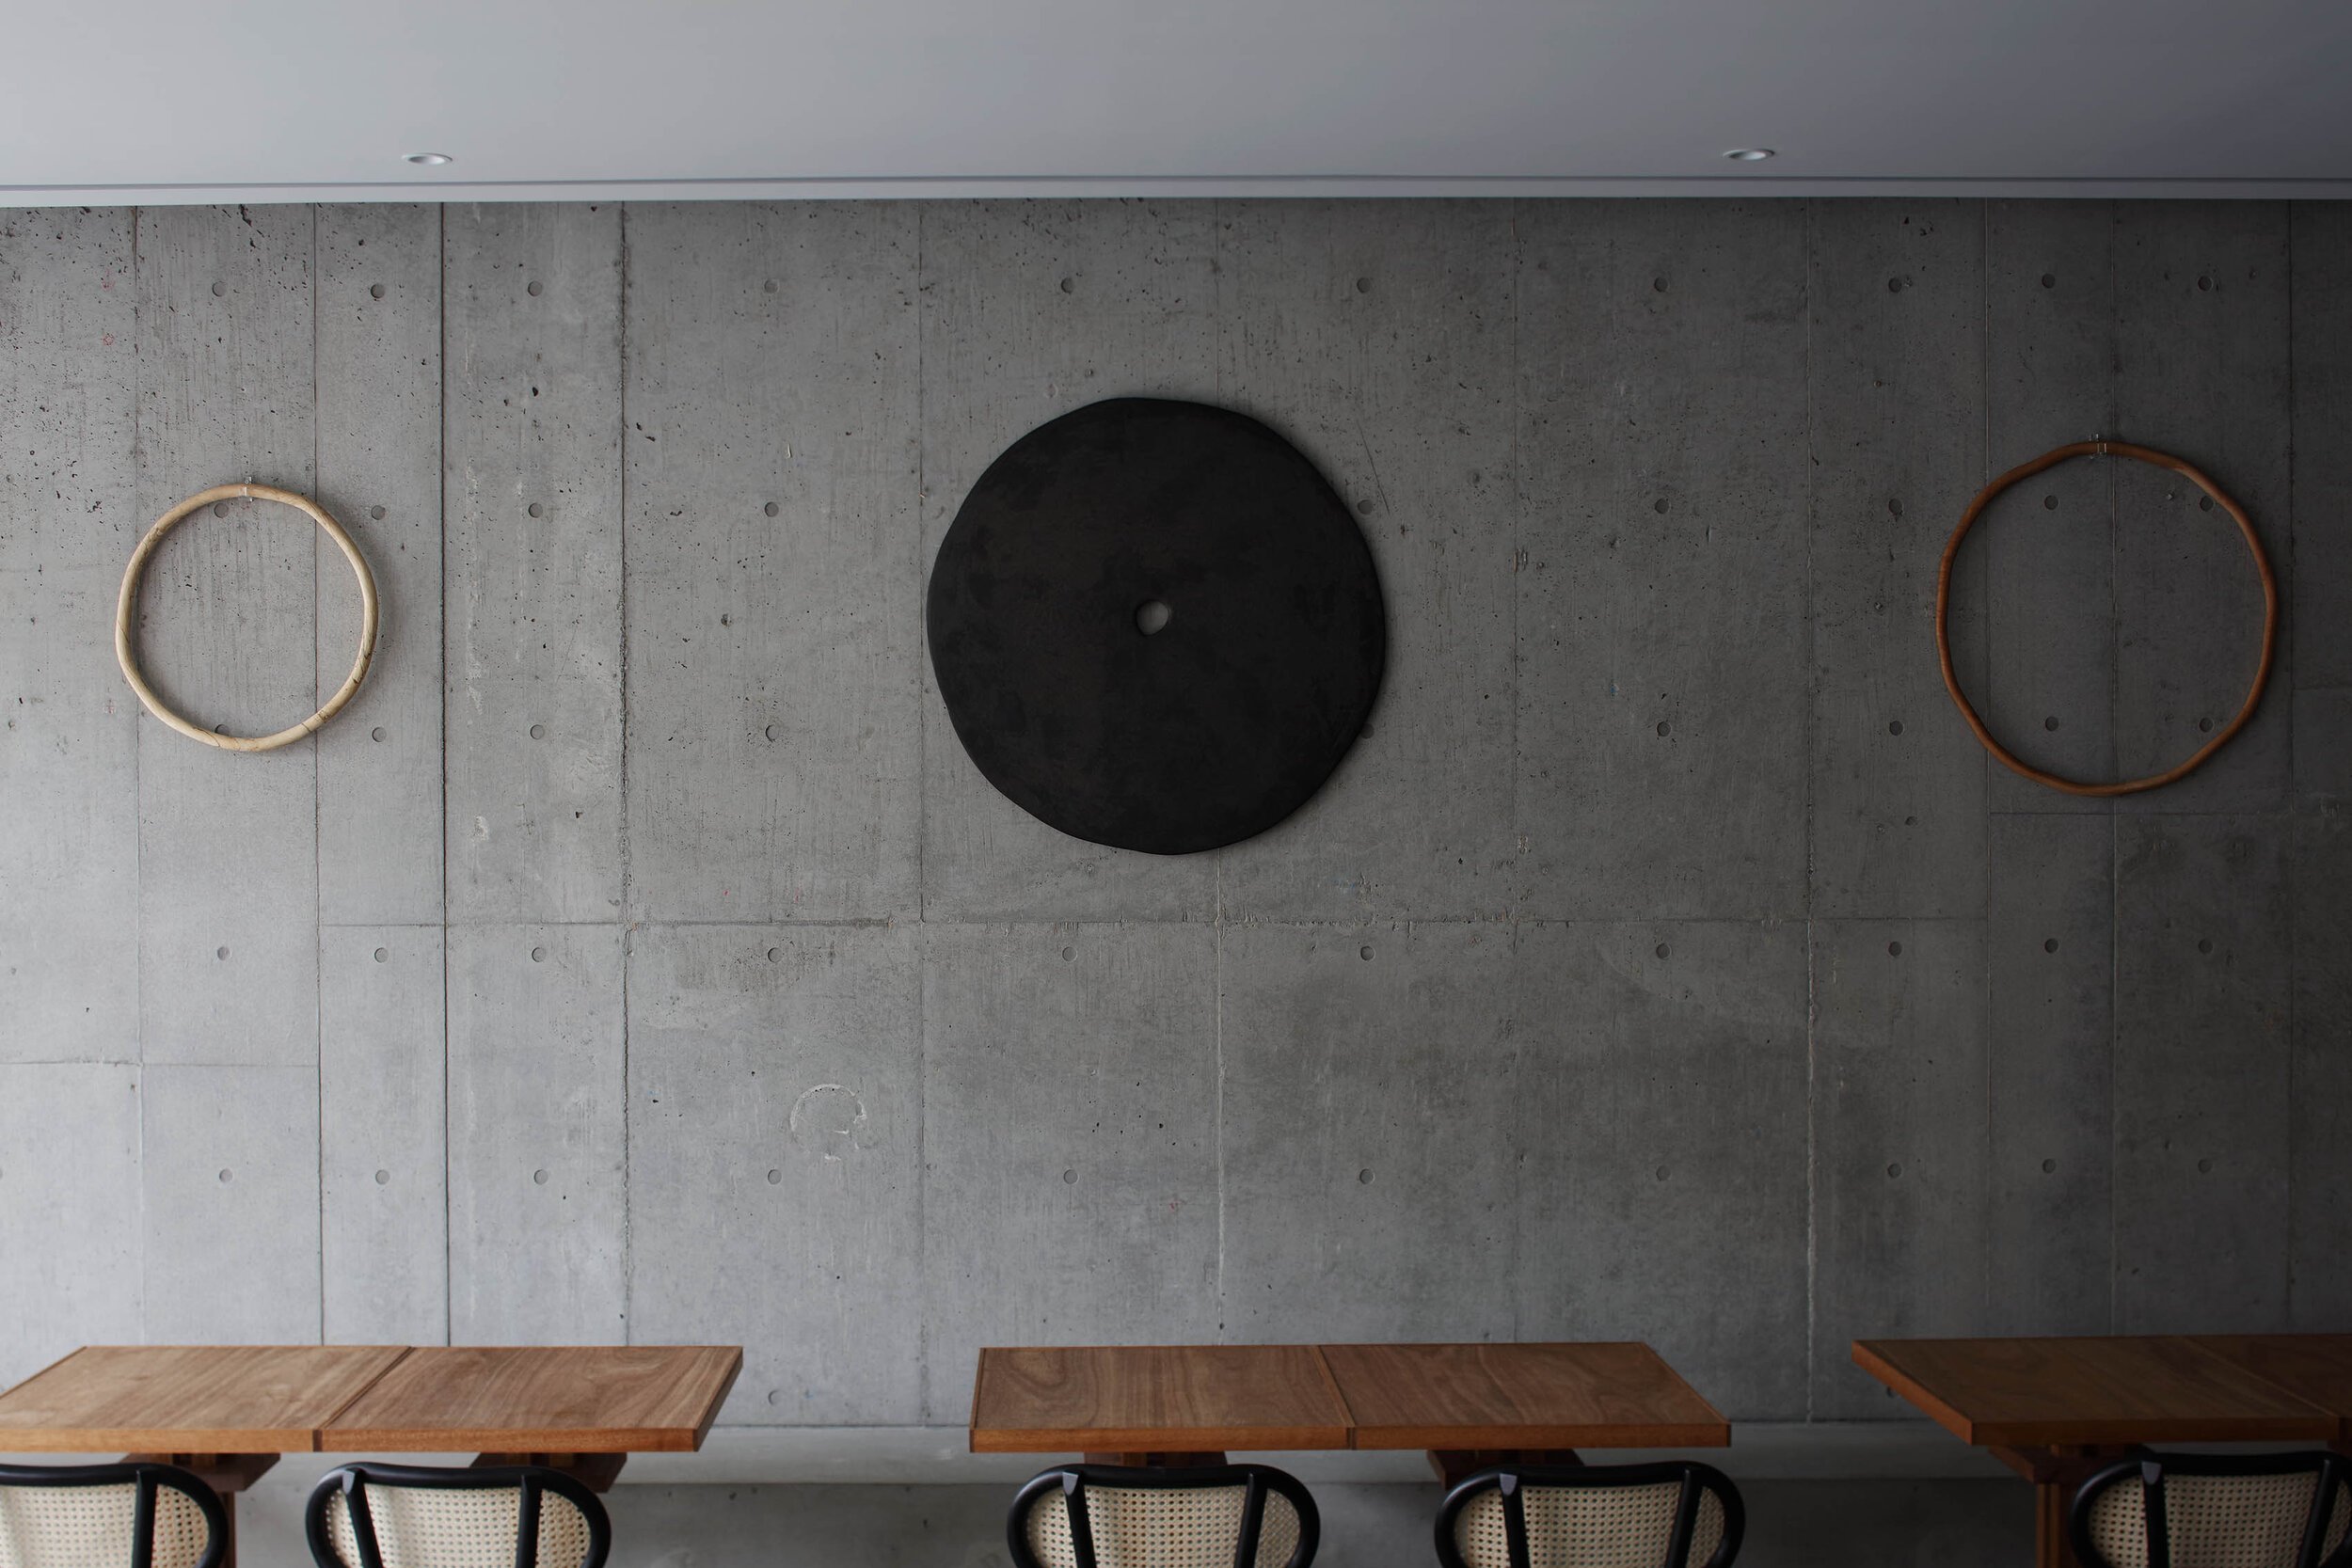  Yusuke Seki Studioの関祐介がデザインしたOgawa Coffee Laboratoryのテーブル席まわり 